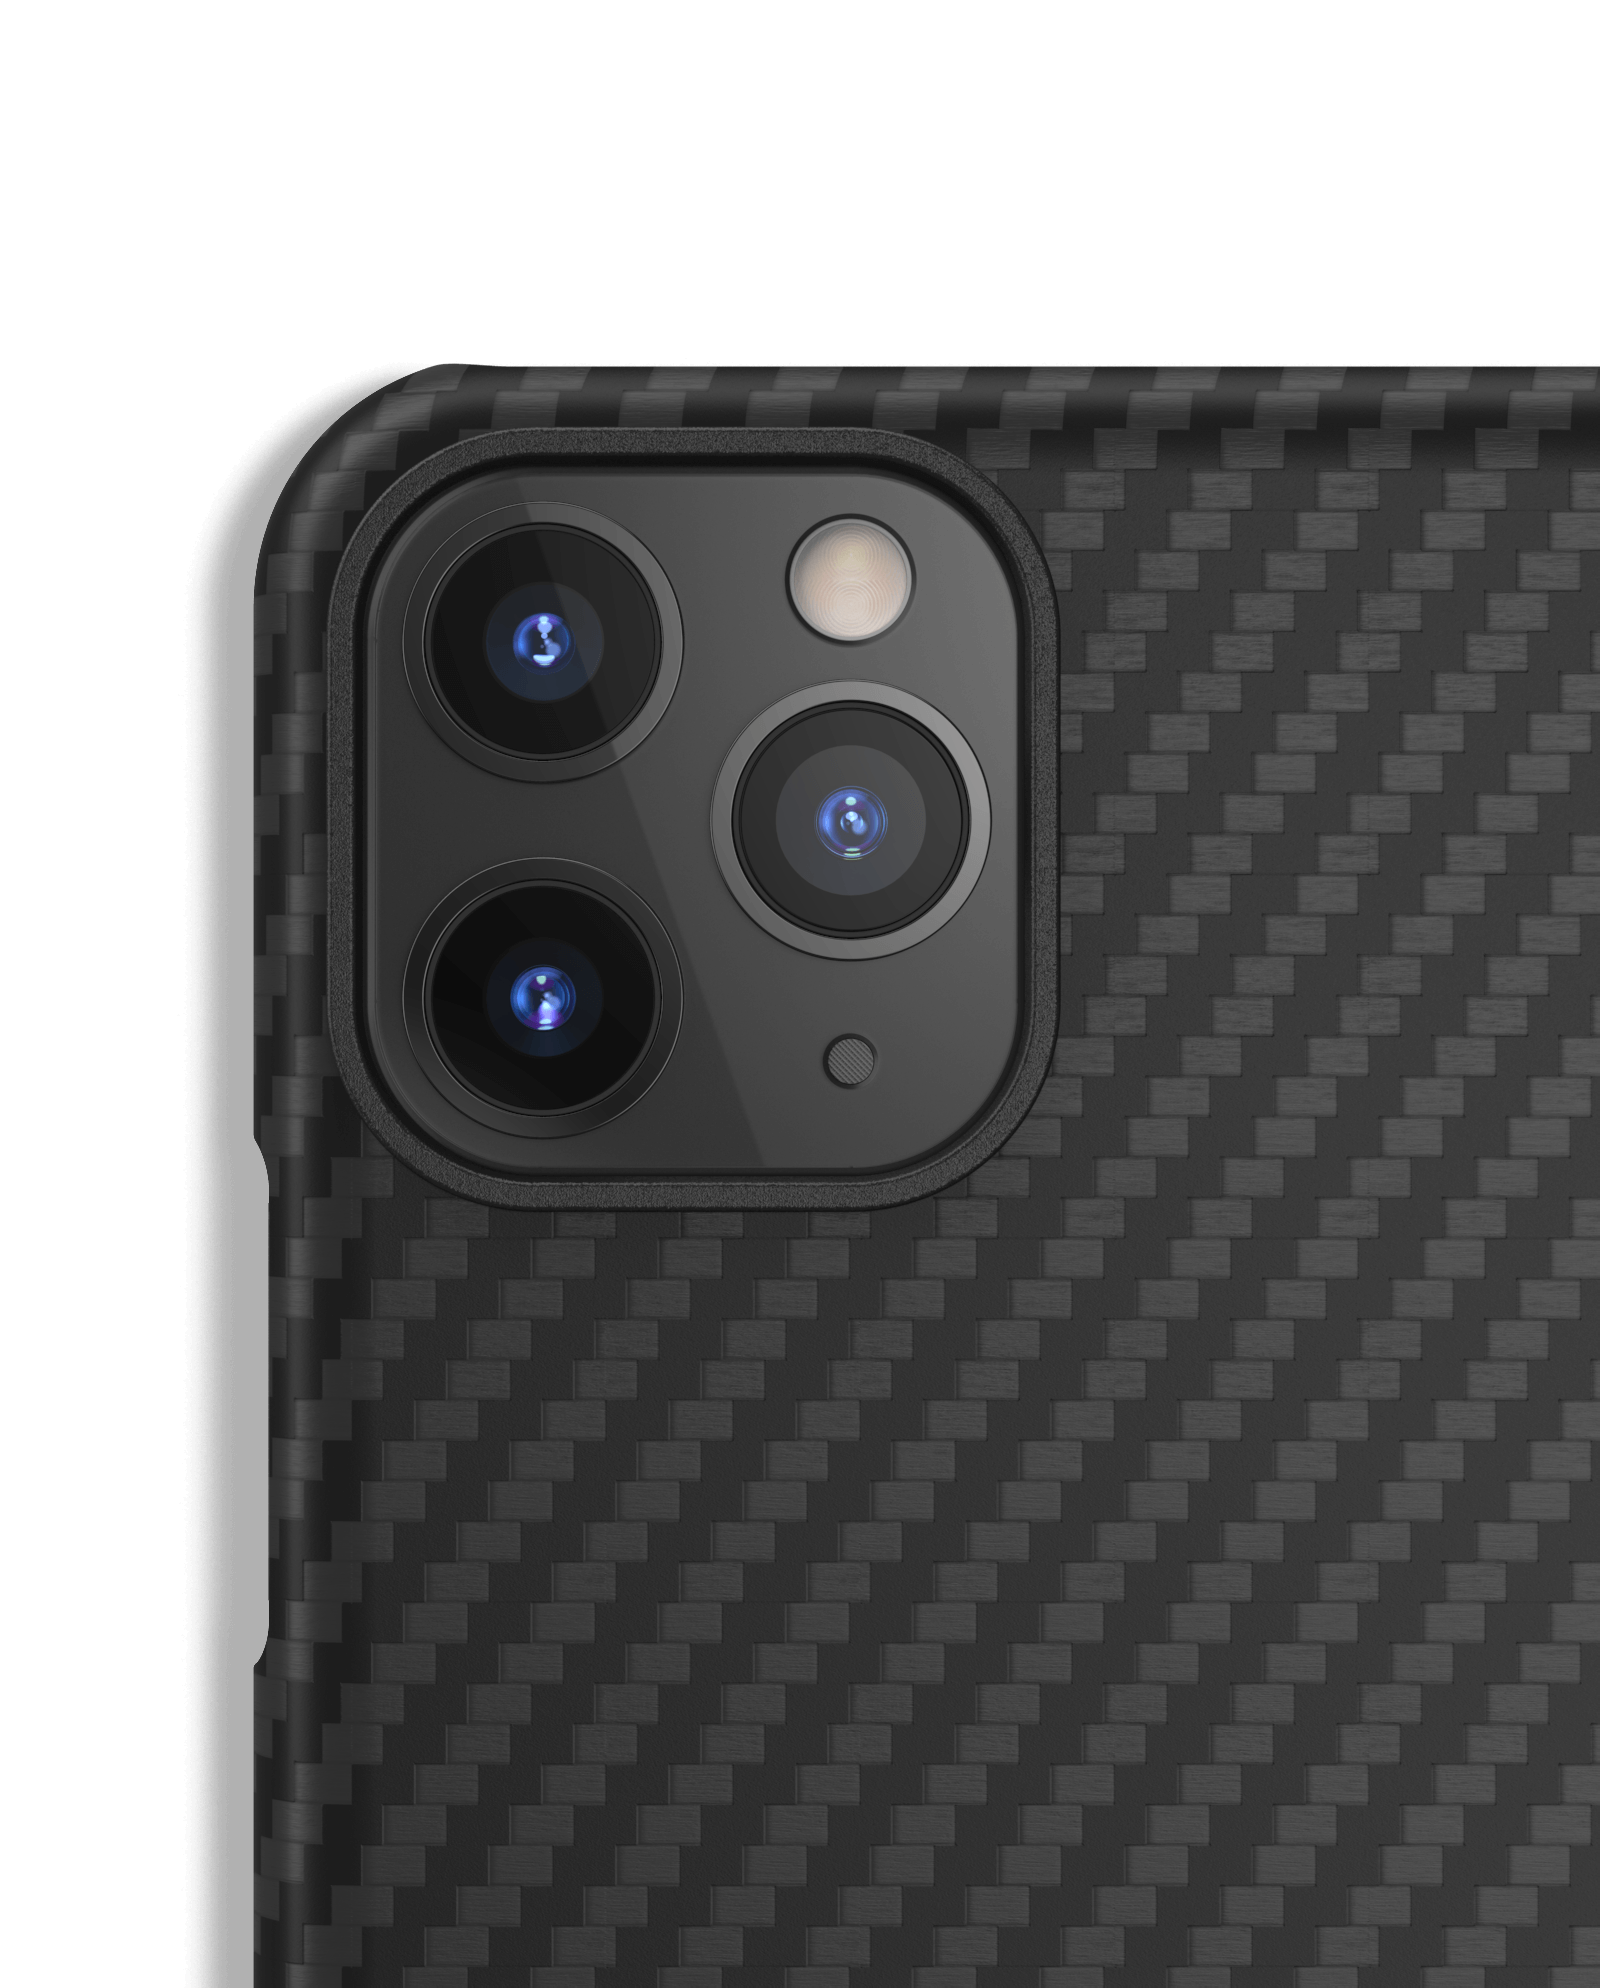 Close up of camera on cell phone with Mason aramid fiber case